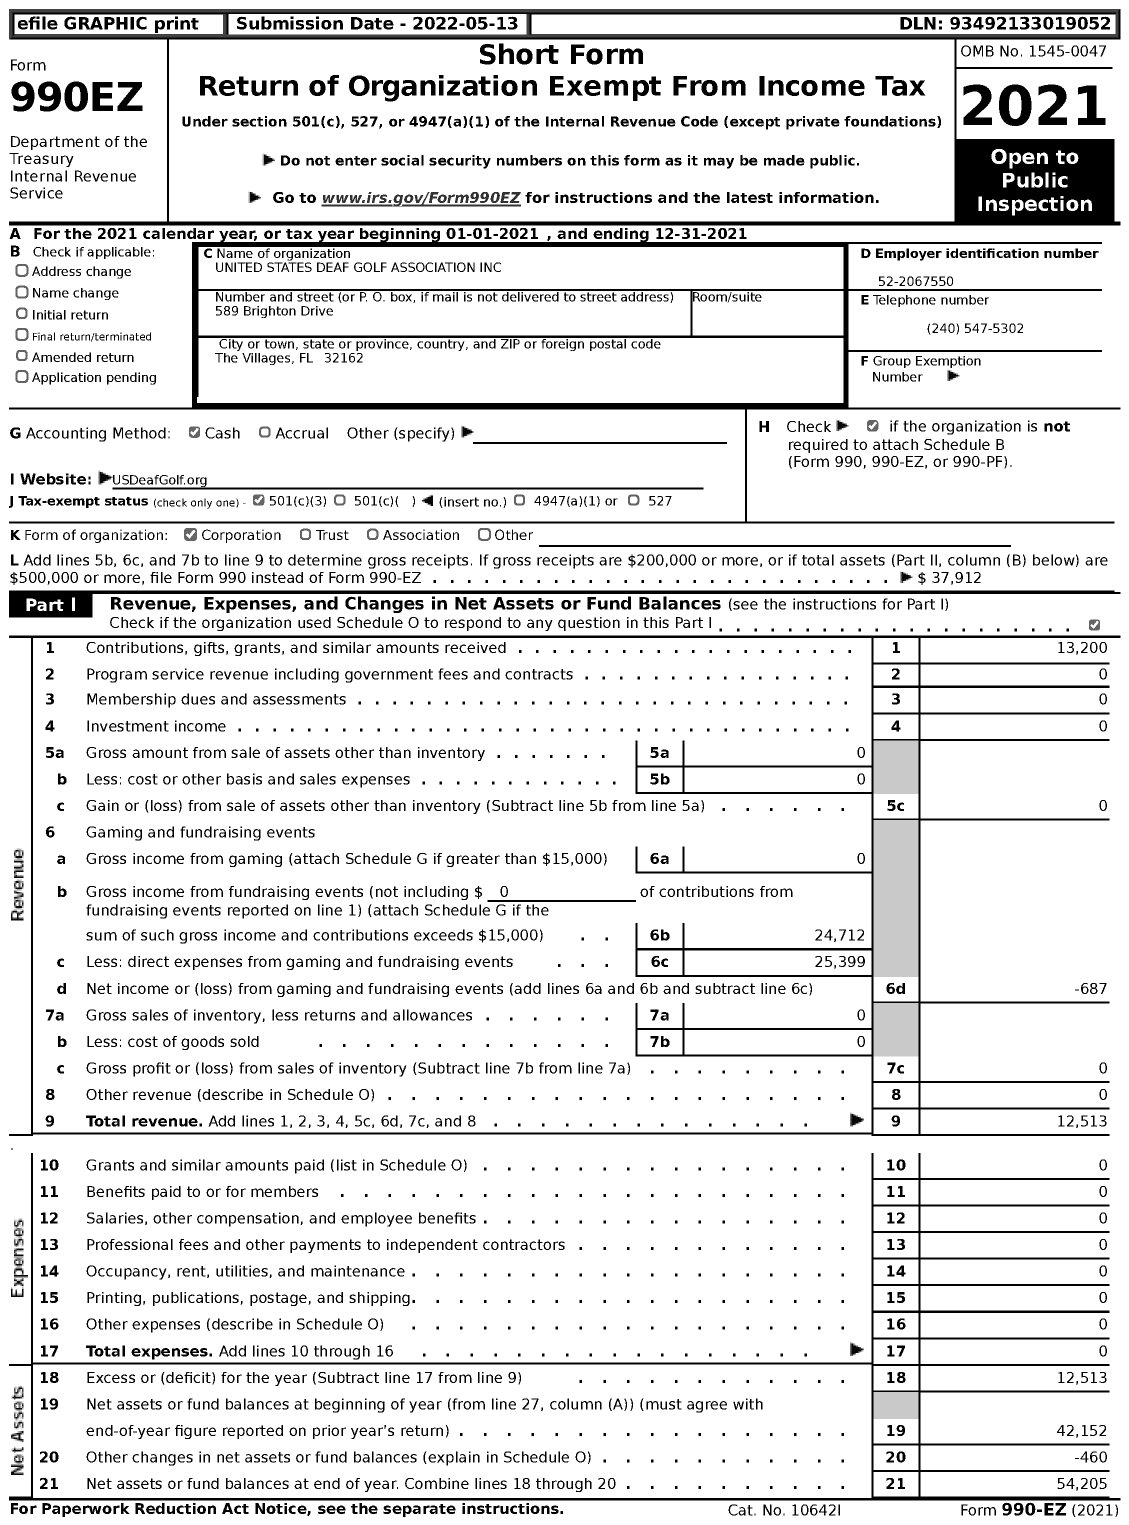 Image of first page of 2021 Form 990EZ for United States Deaf Golf Association